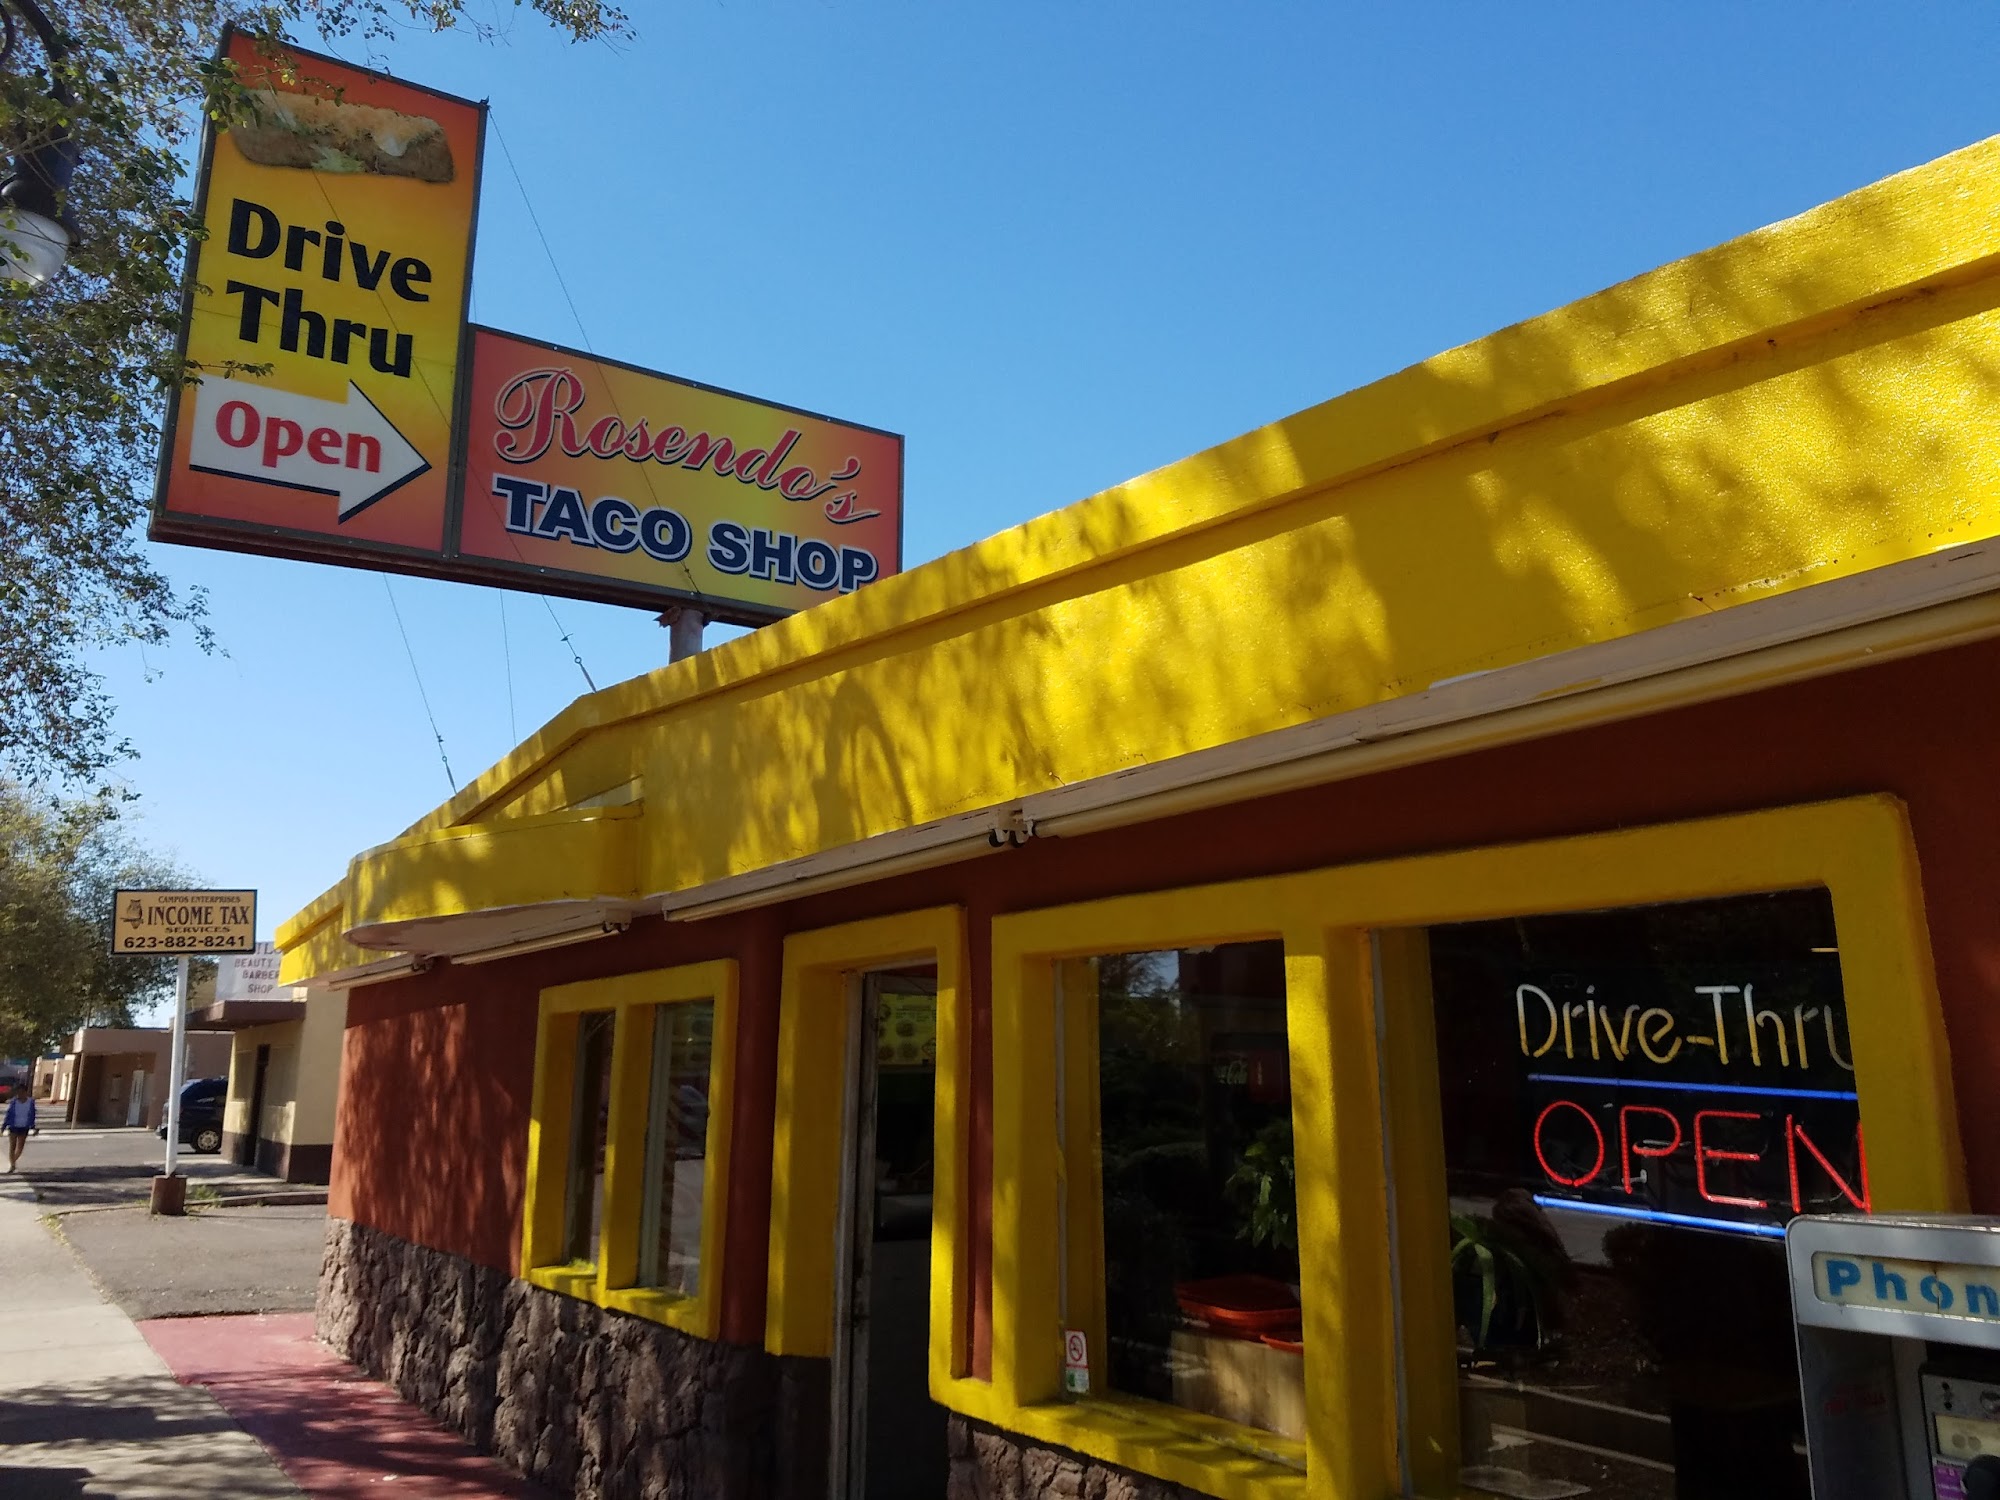 Rosendo's Taco Shop